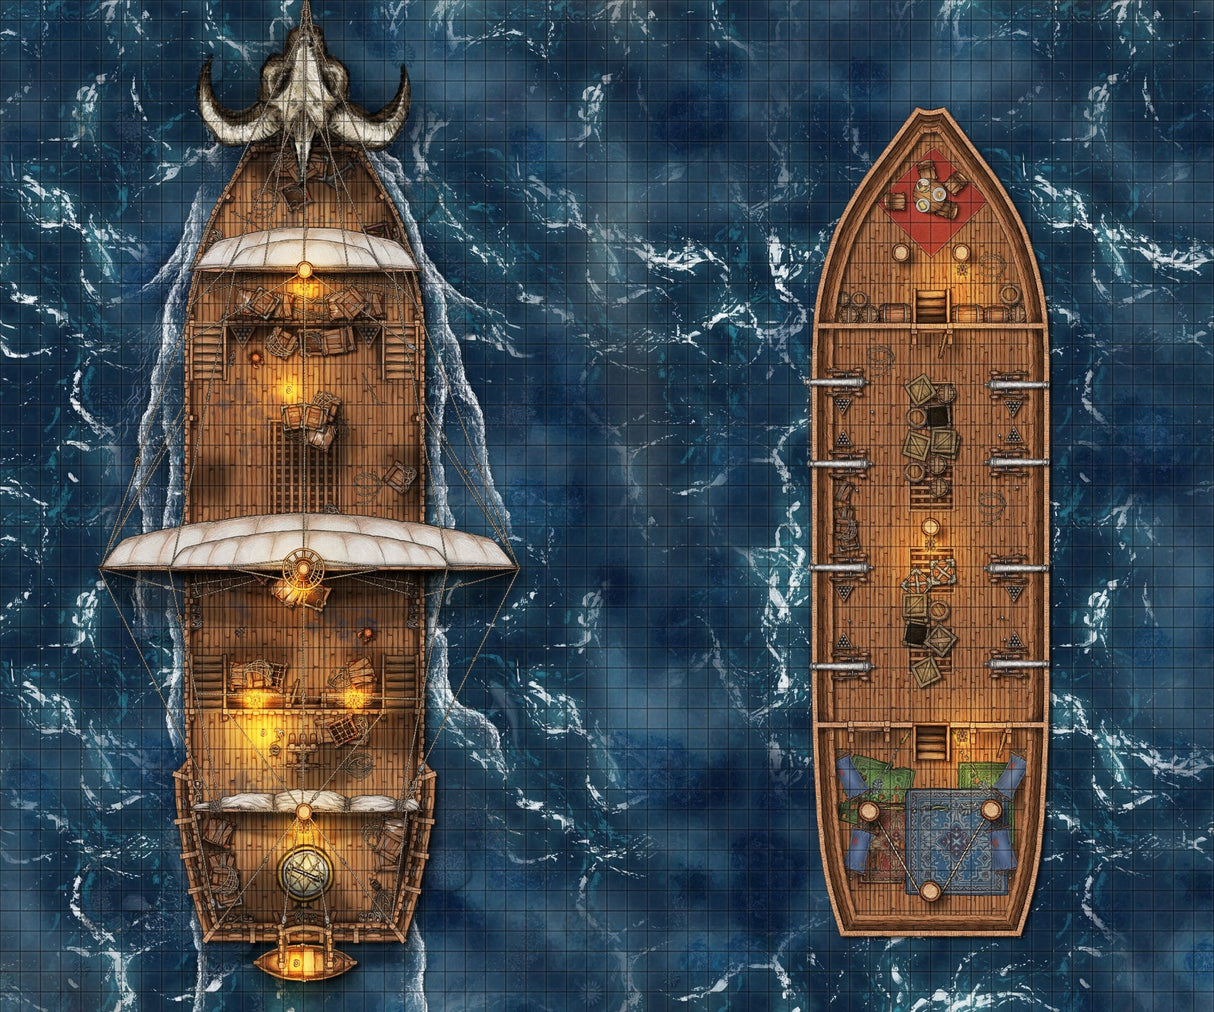 Hunt for the Last Sea Angel - a one shot D&D 5E adventure. Free PDF Download - Mini Megastore